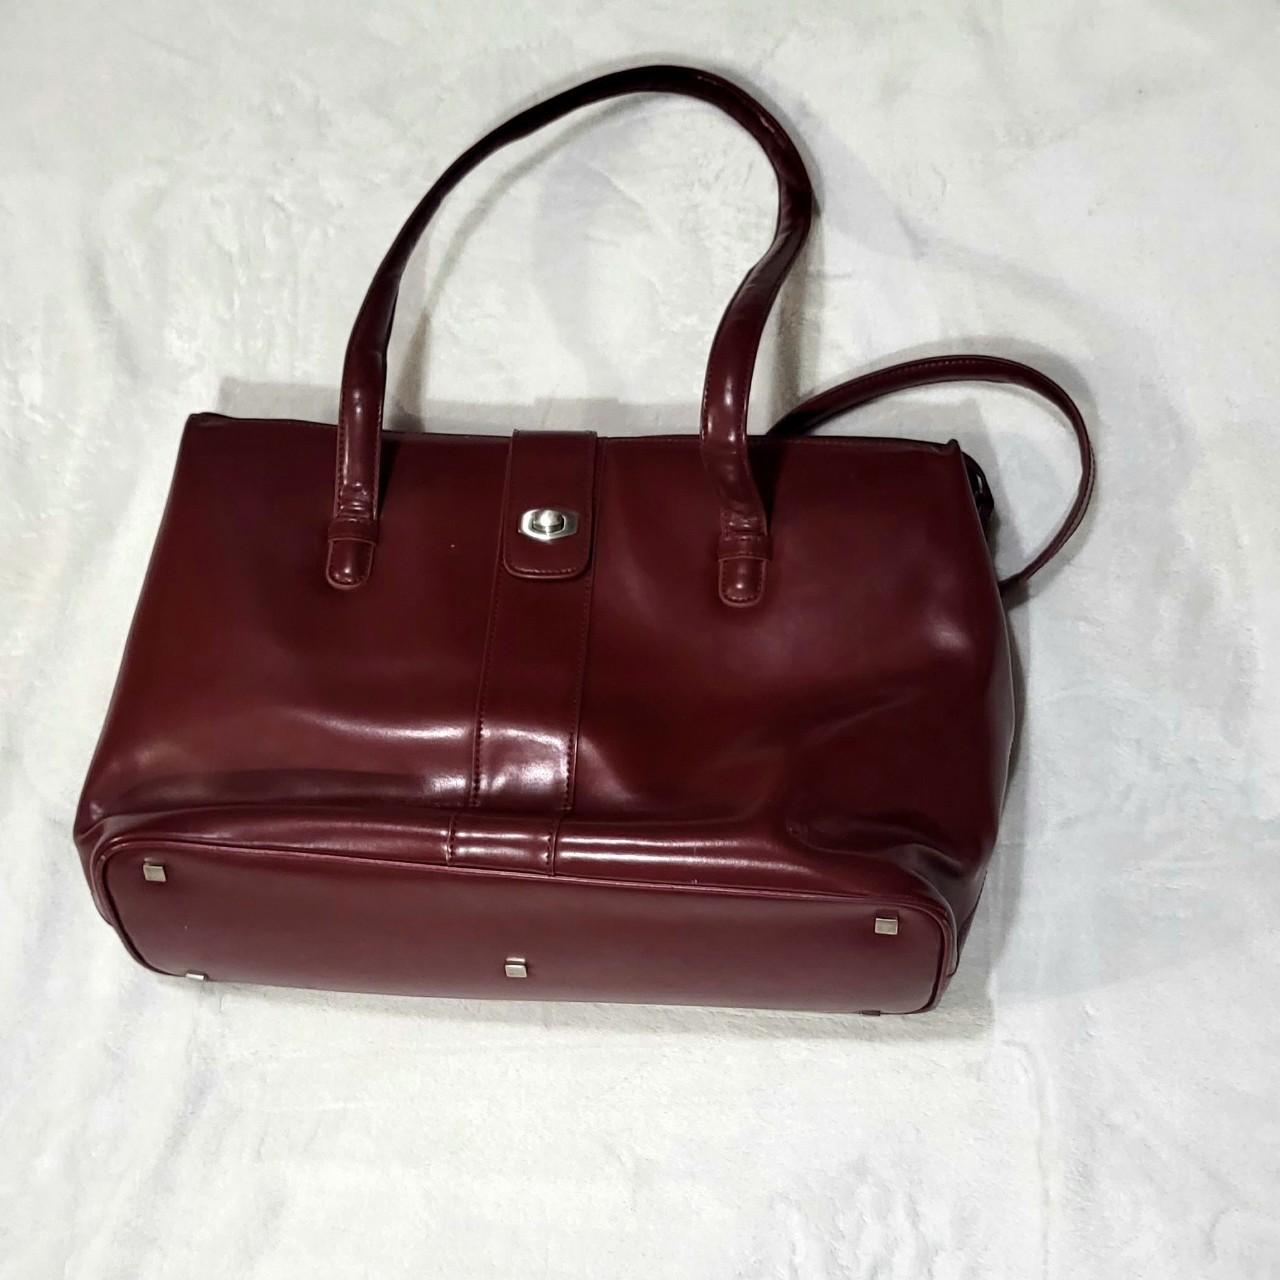 Franklin Covey Leather Briefcase Burgundy - Depop